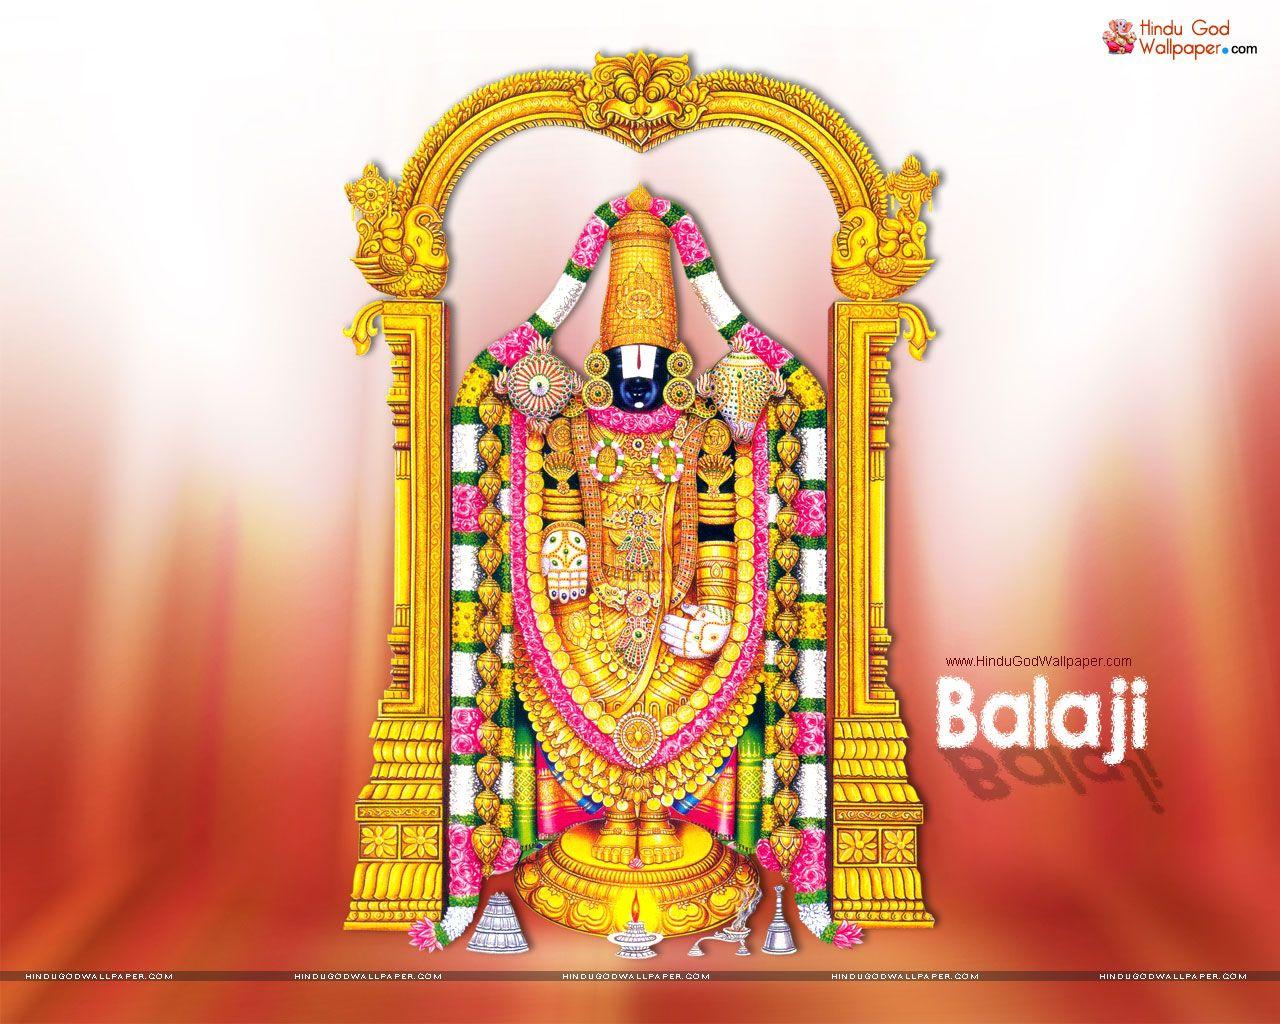 Tirupati Balaji Photo Wallpaper Free Download. Lord in 2019